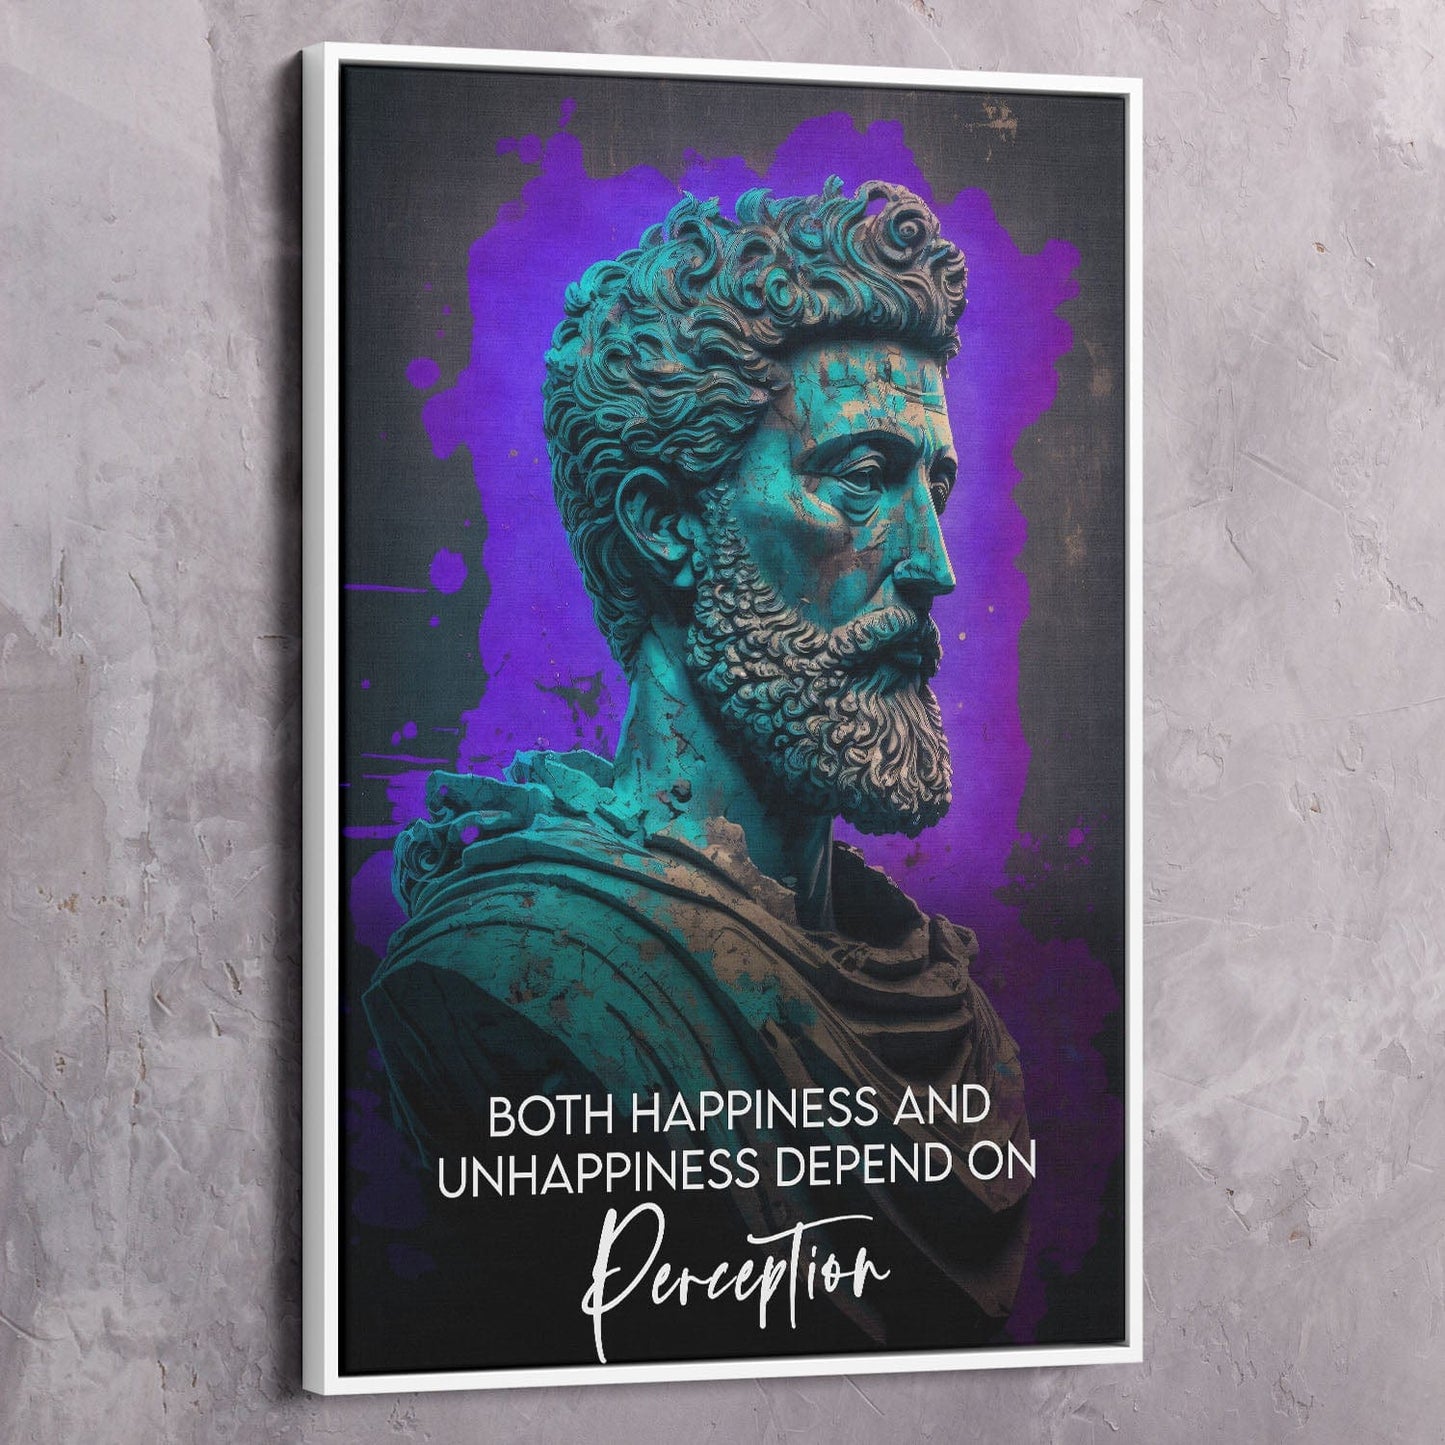 Marcus Aurelius - Perception Quote Wall Art | Inspirational Wall Art Motivational Wall Art Quotes Office Art | ImpaktMaker Exclusive Canvas Art Portrait